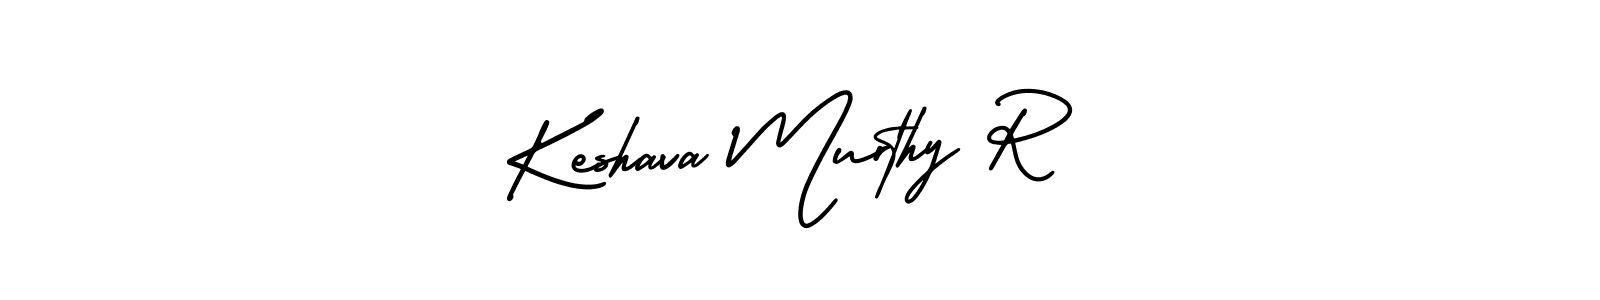 How to Draw Keshava Murthy R signature style? AmerikaSignatureDemo-Regular is a latest design signature styles for name Keshava Murthy R. Keshava Murthy R signature style 3 images and pictures png